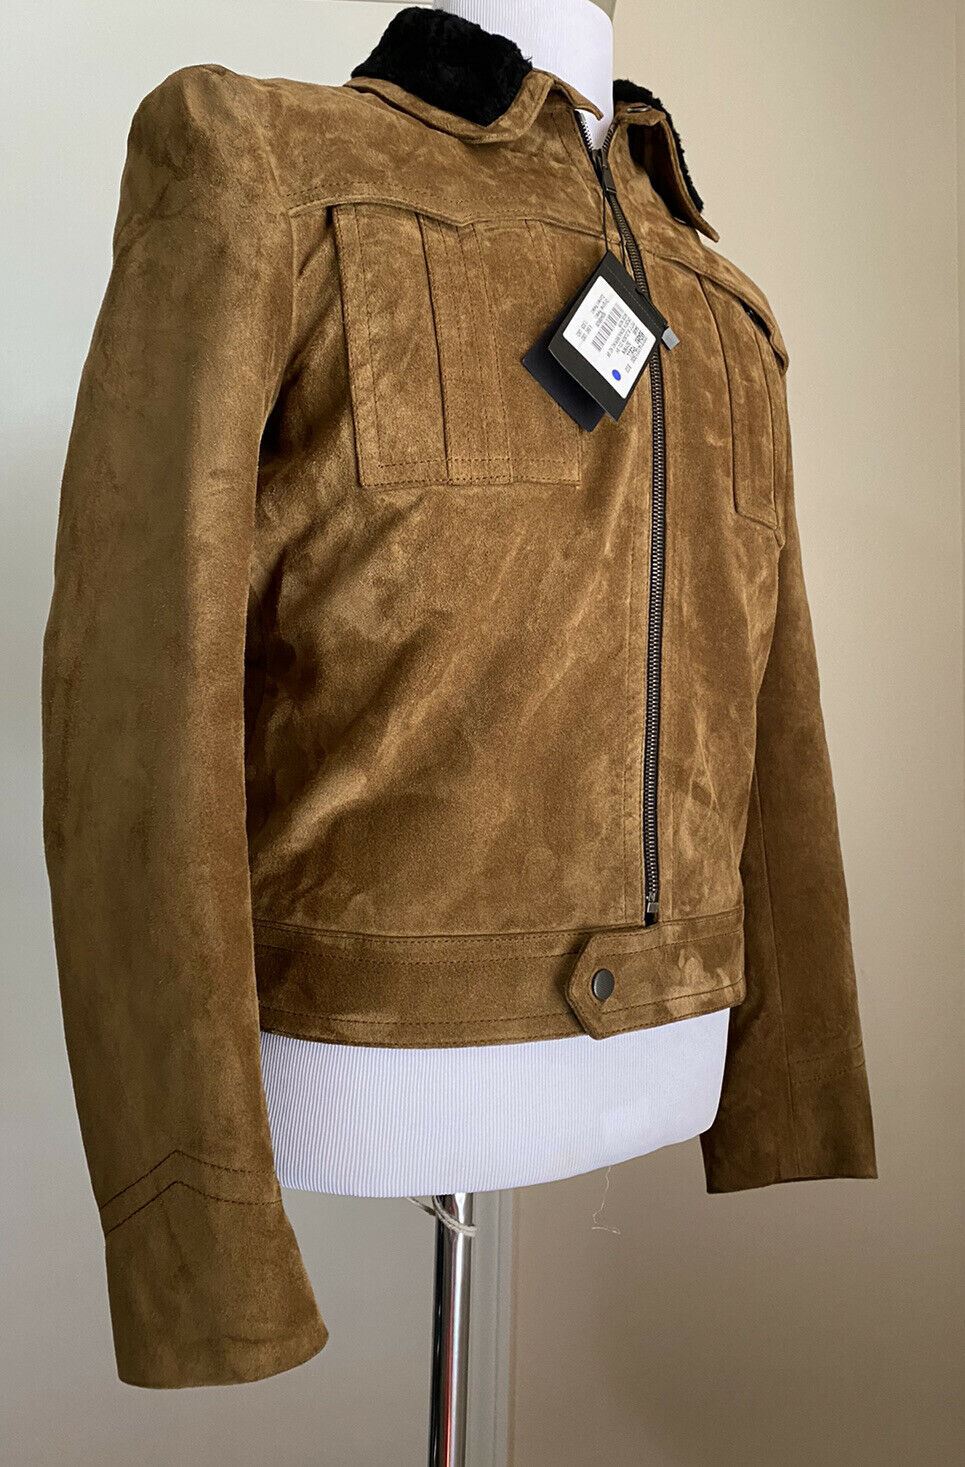 New $4590 Saint Laurent Men’s Suede/Shearing Jacket Coat Brown 38 US ( S-M )